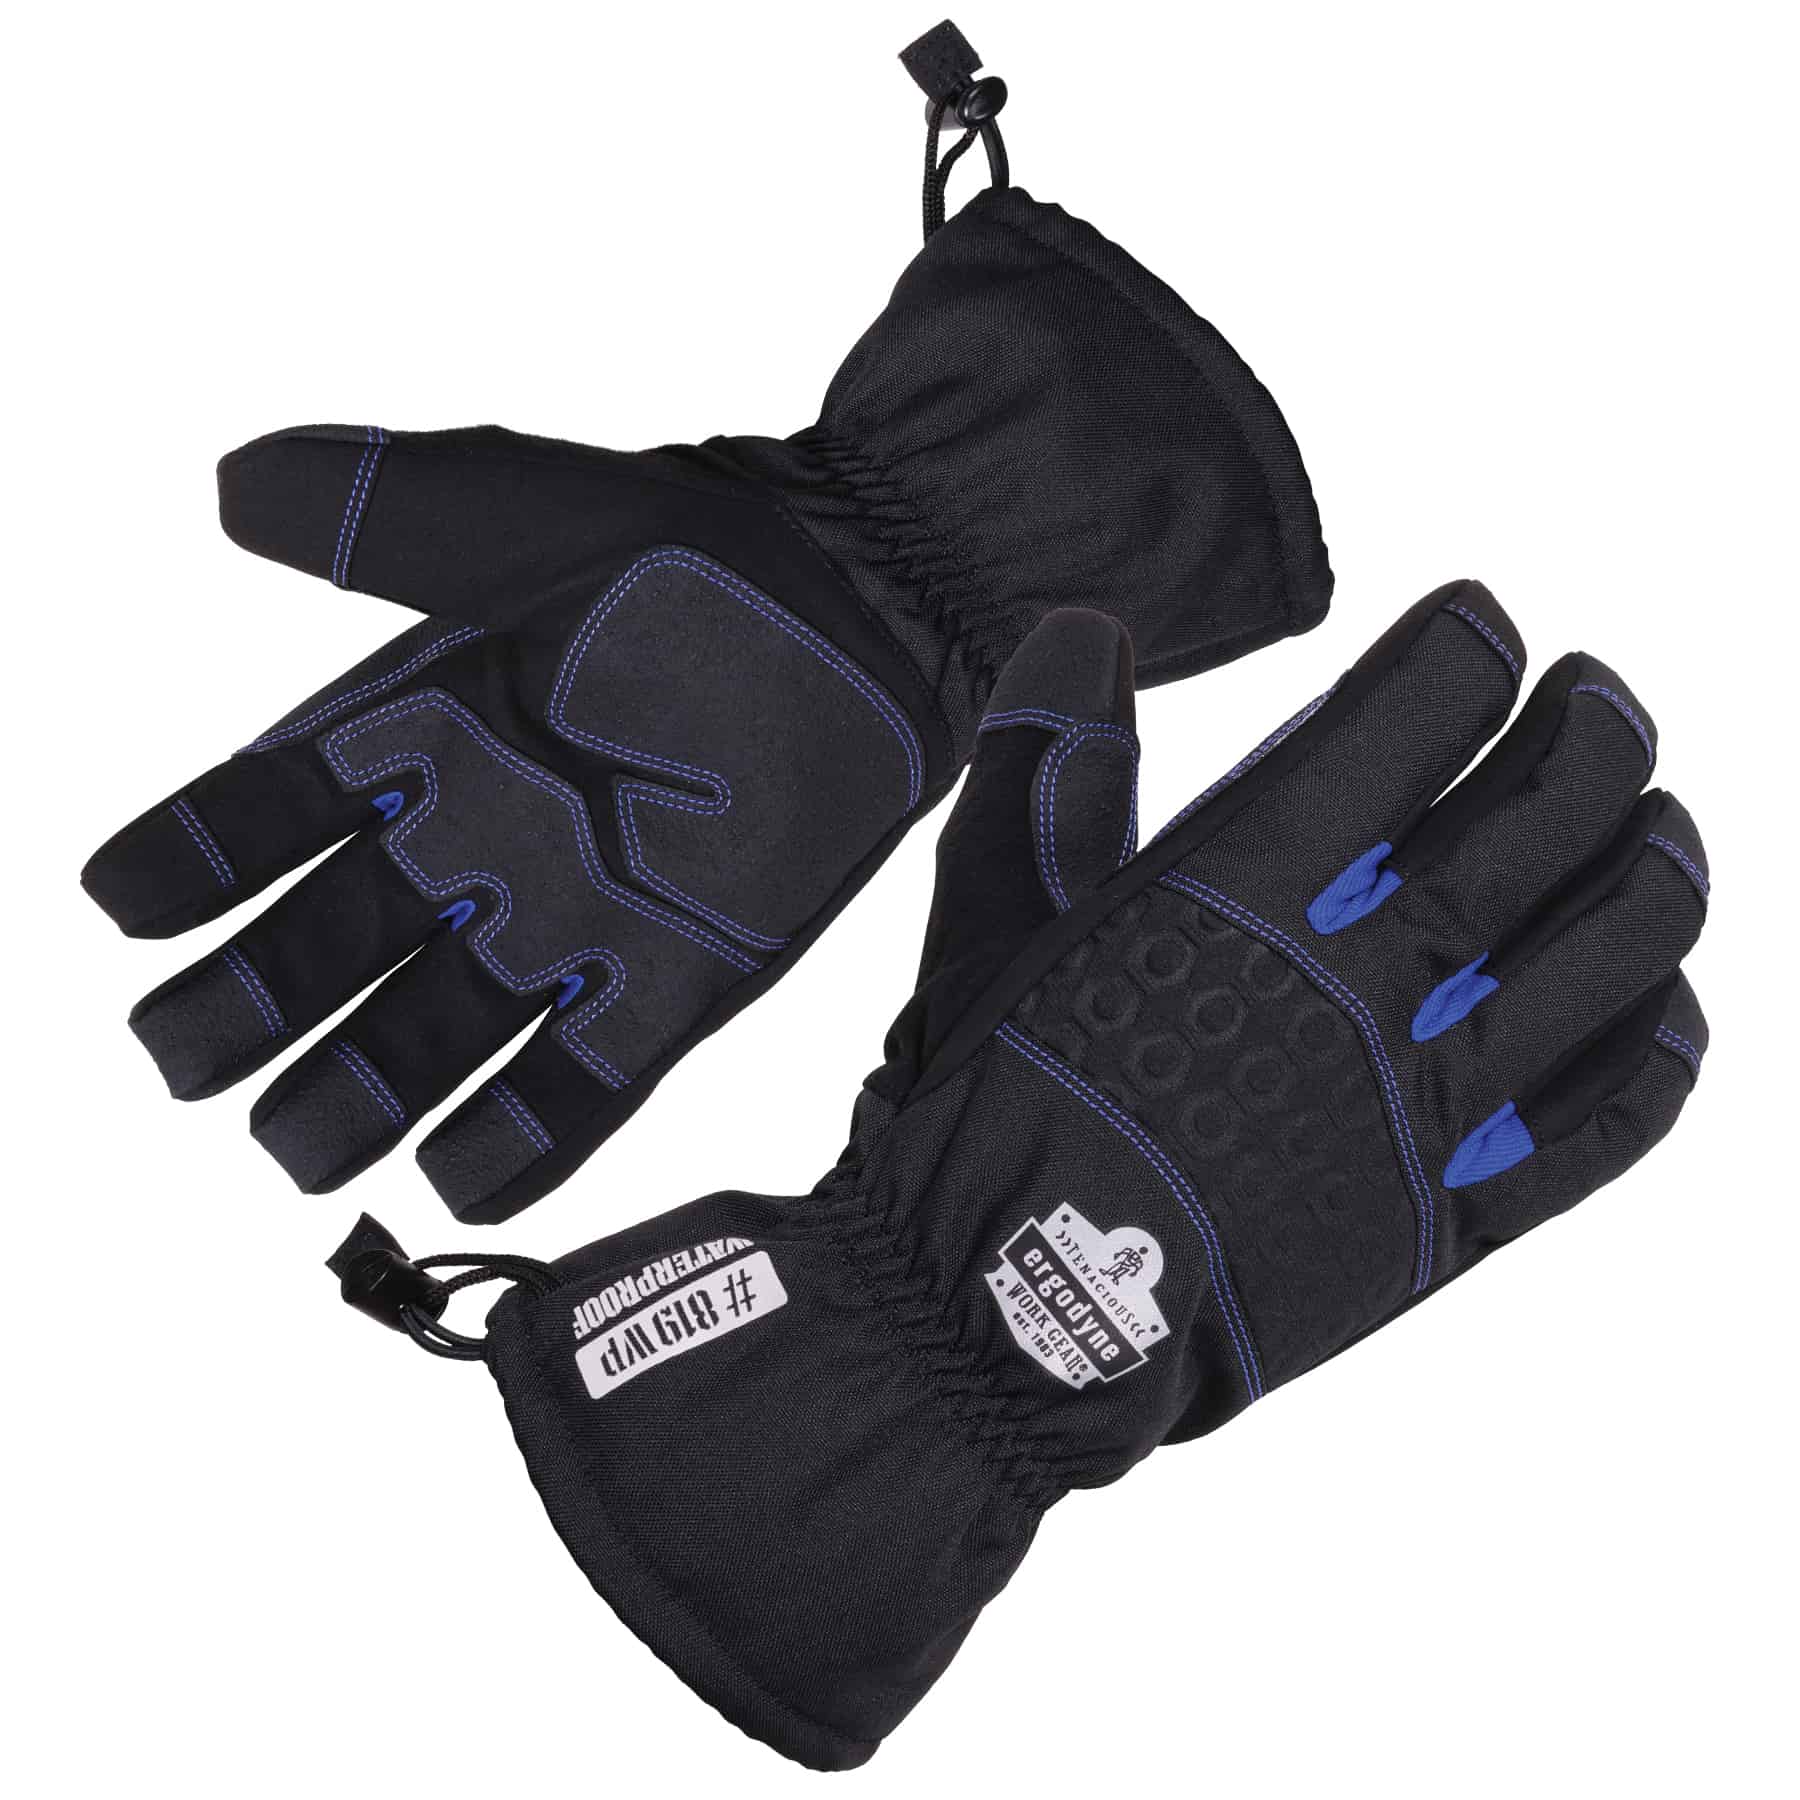 https://www.ergodyne.com/sites/default/files/product-images/17612-819wp-extreme-waterproof-winter-work-gloves-pair.jpg